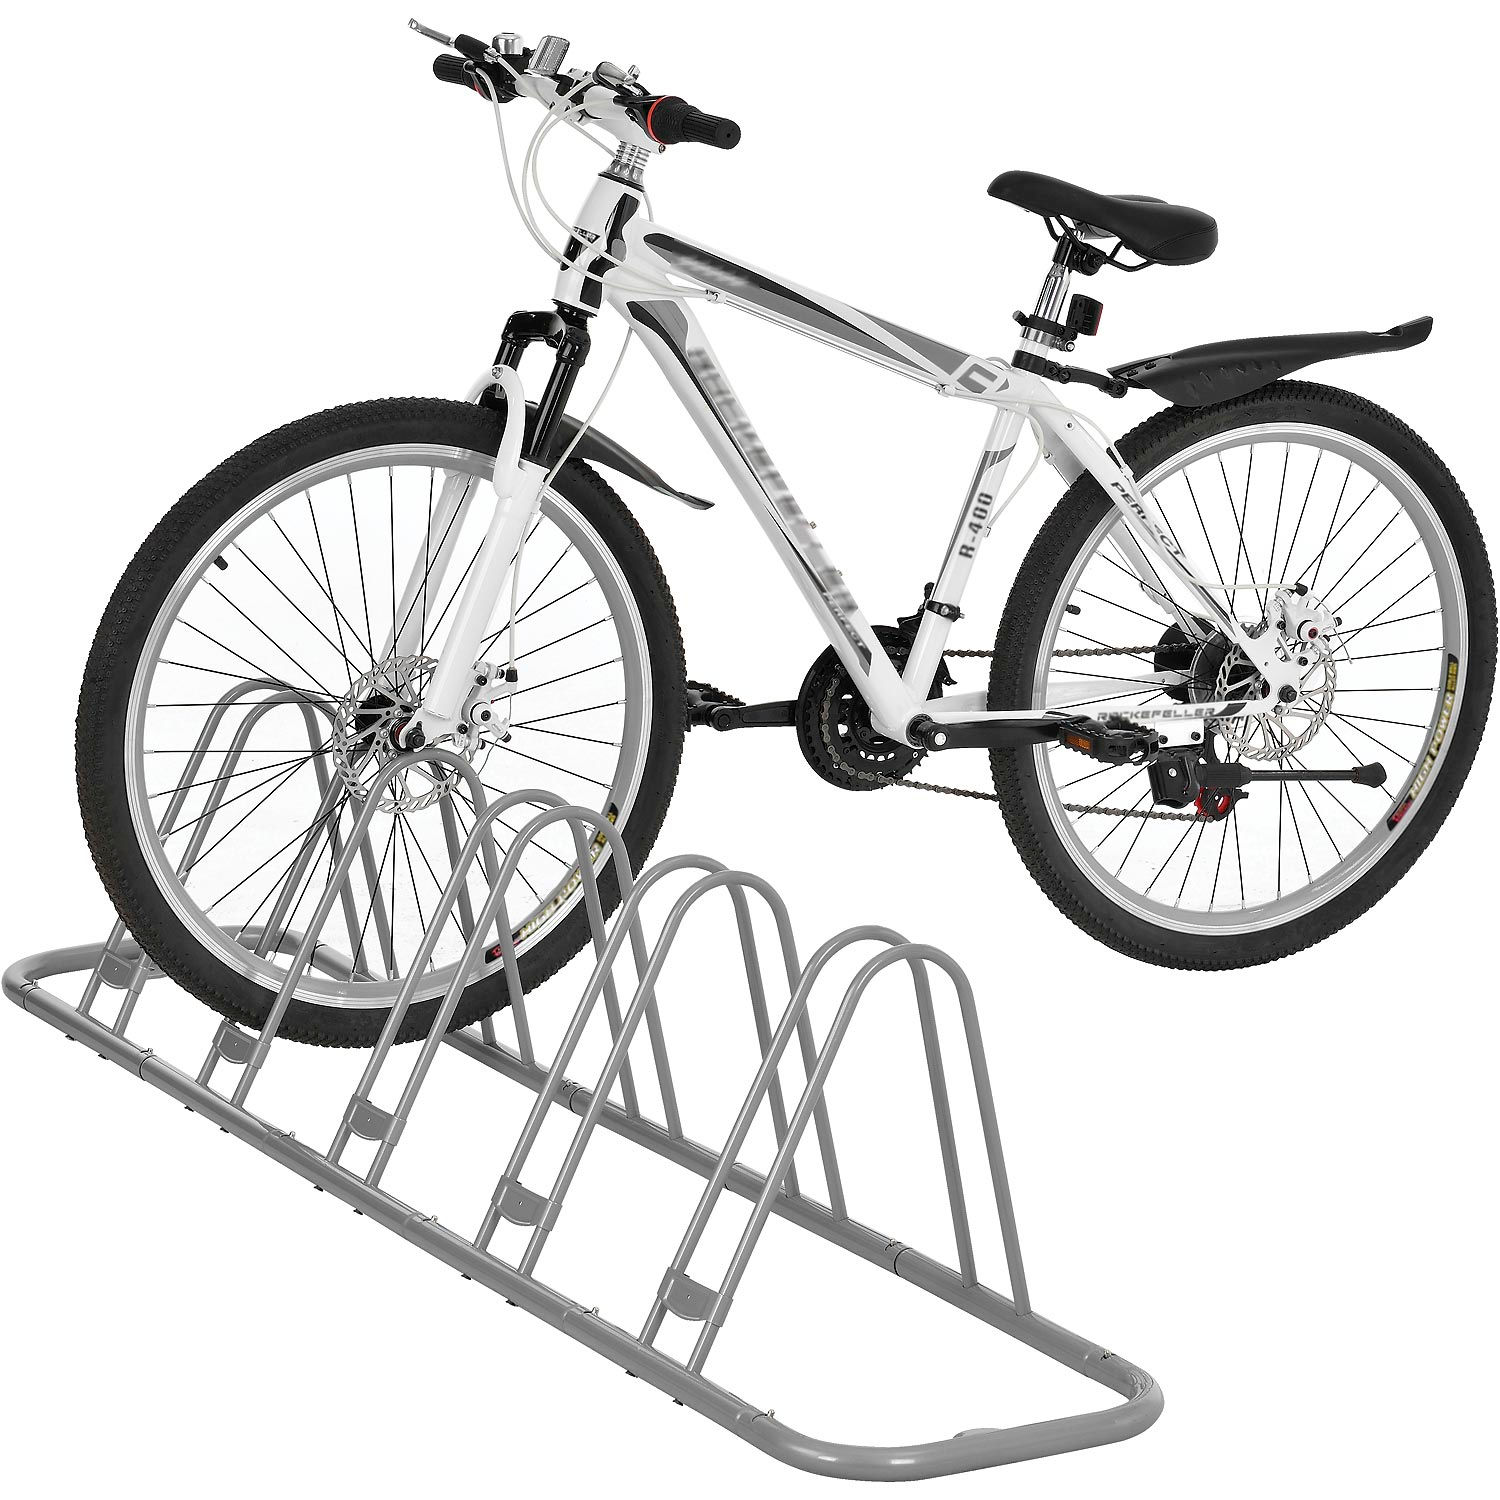 5 bicycle rack